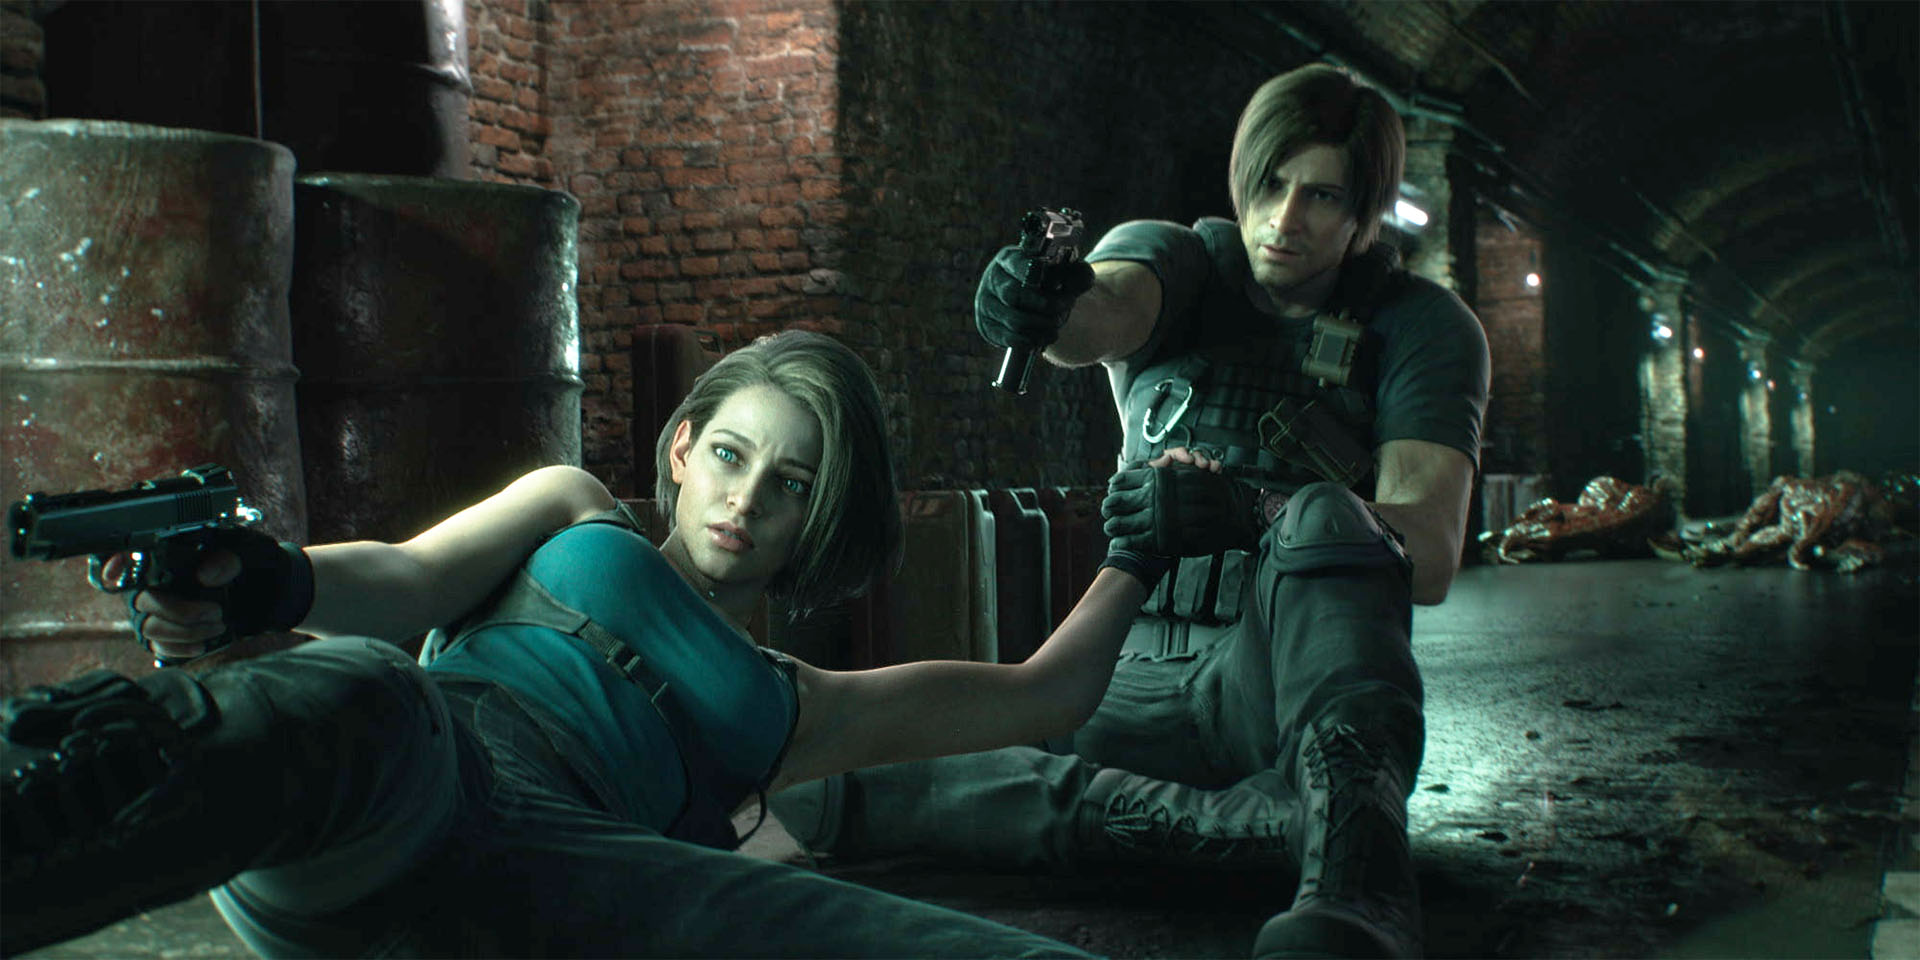 Resident Evil: Death Island chega às plataformas digitais - Canaltech